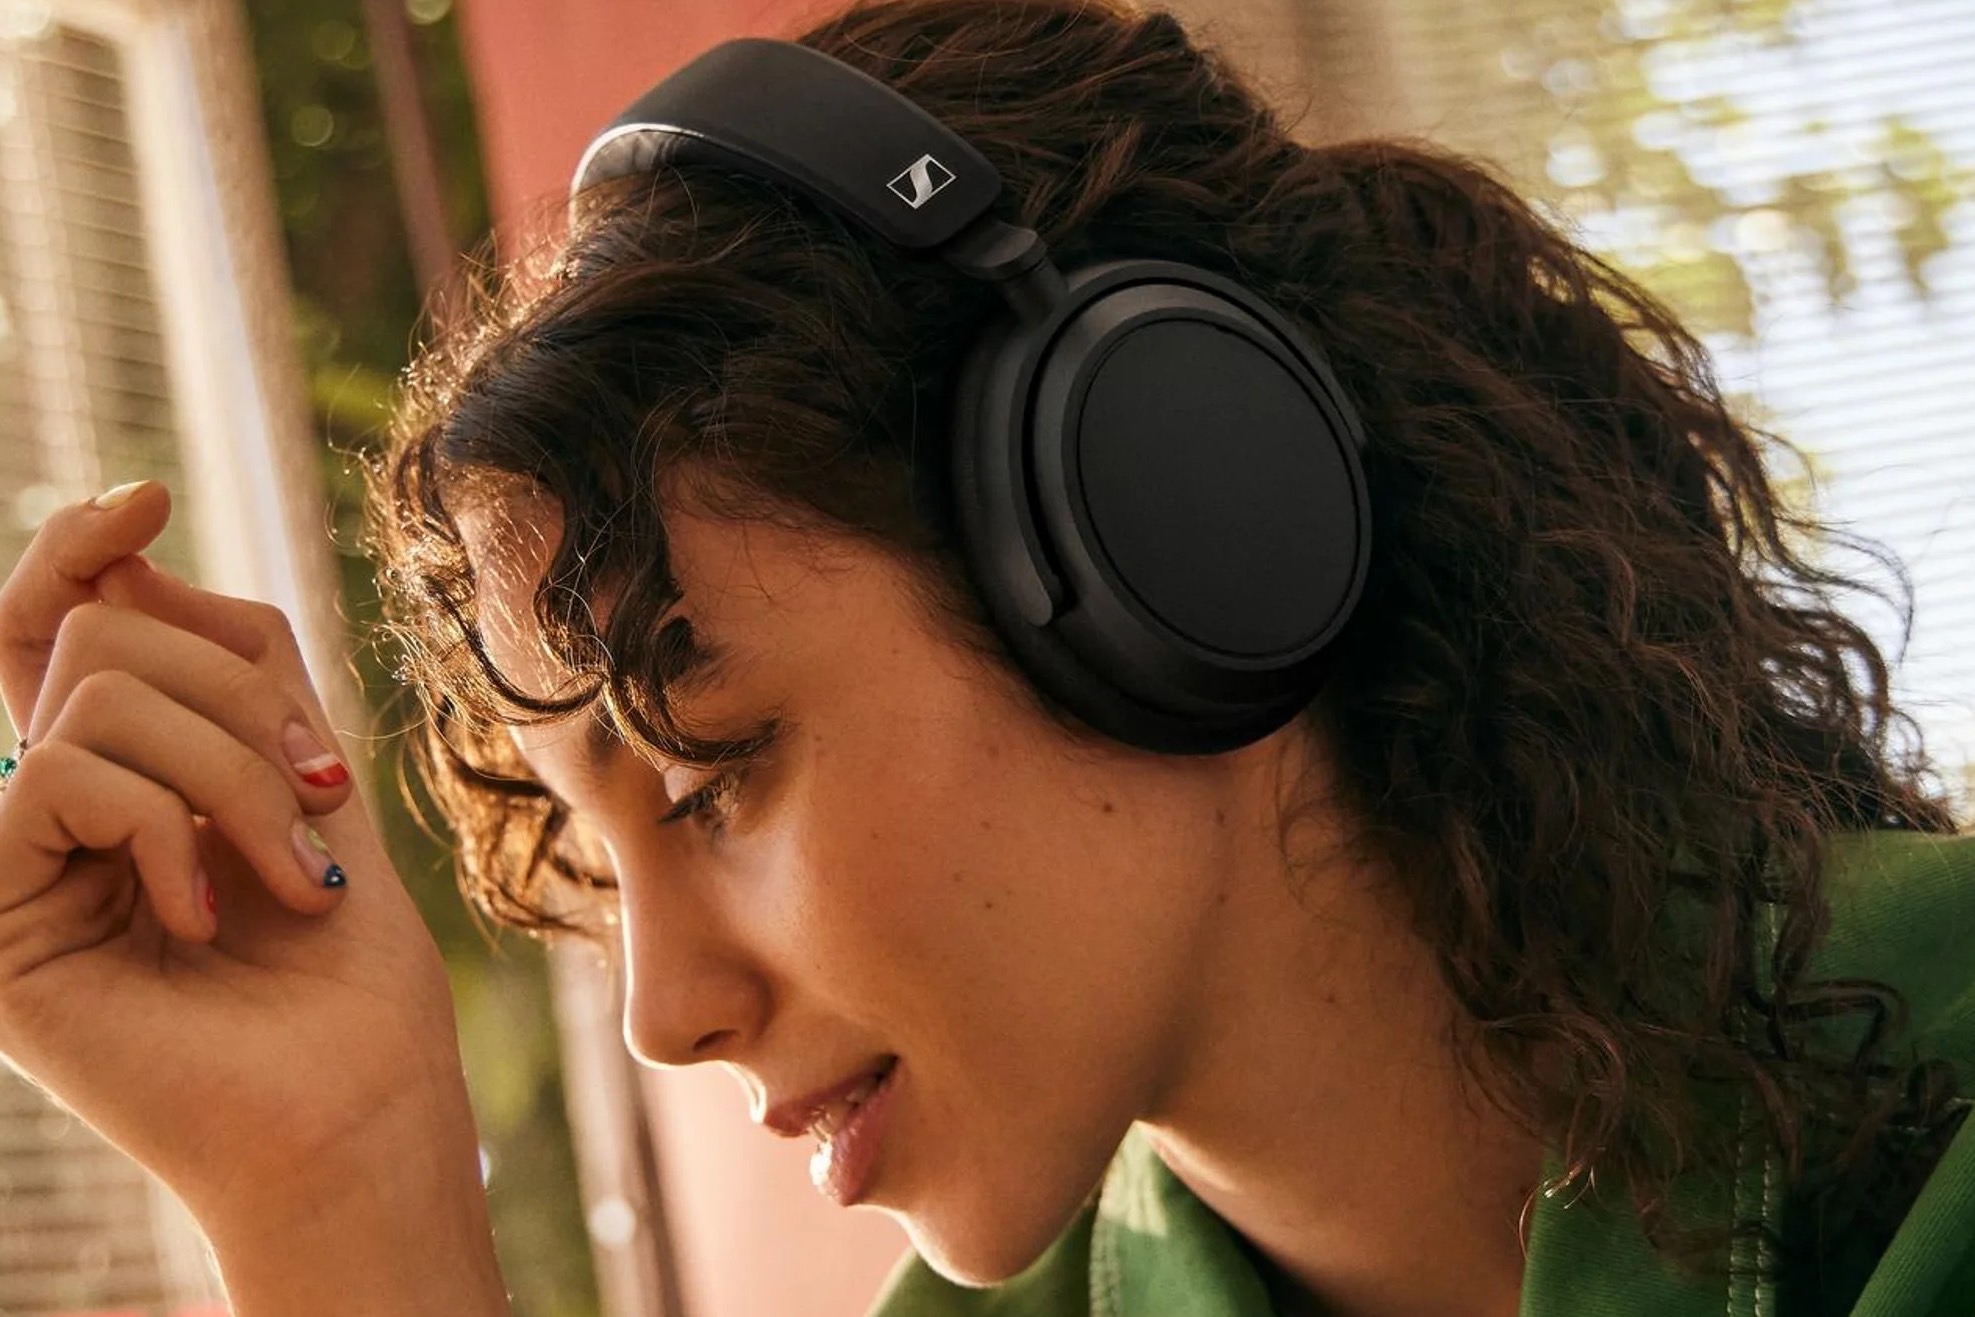 OPENMOVE New-launch Wireless Bone conduction headphones – Shokz Asia